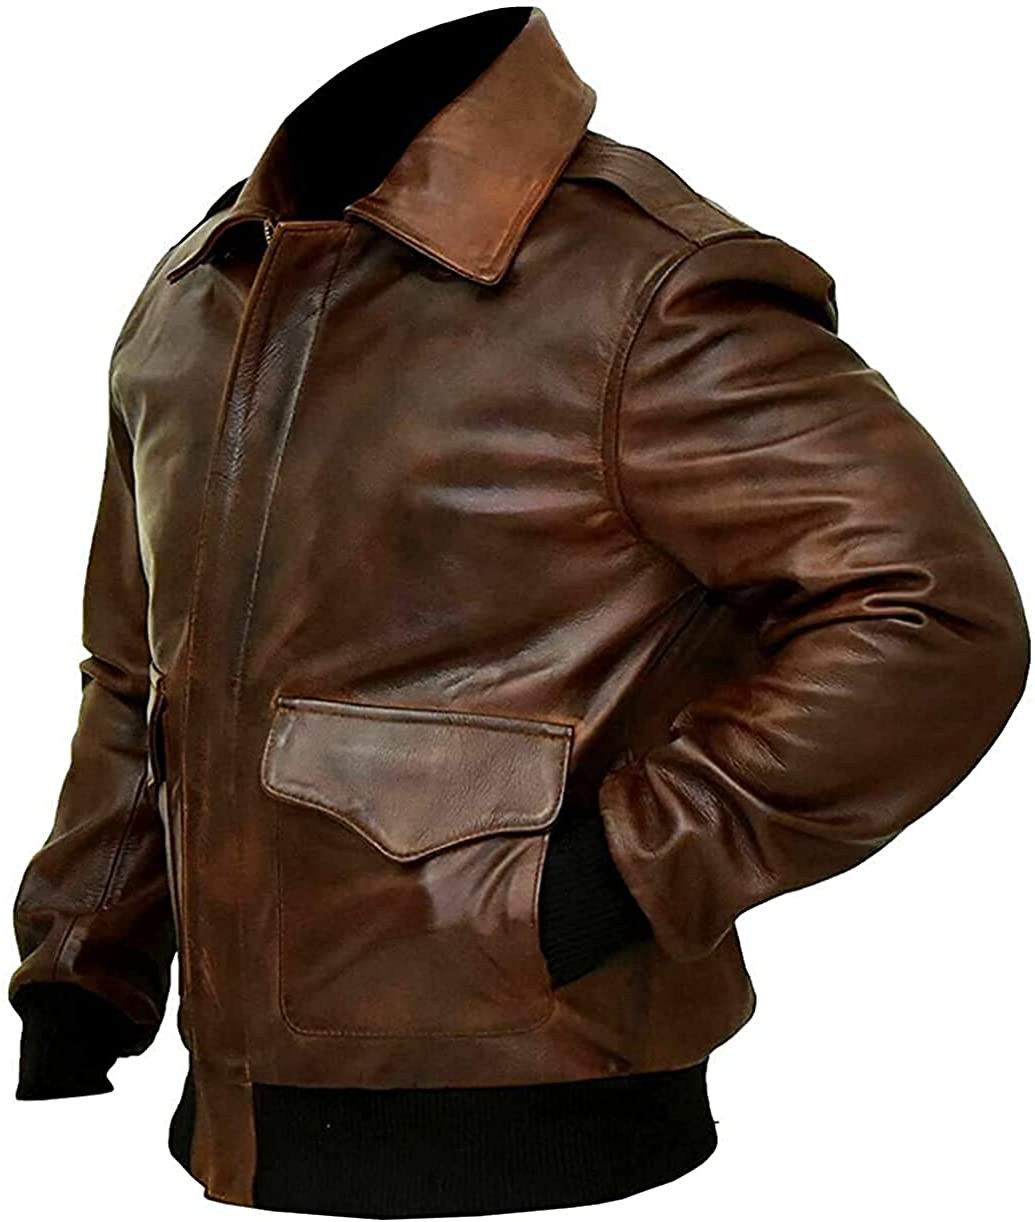 A2 Leather Jacket Men